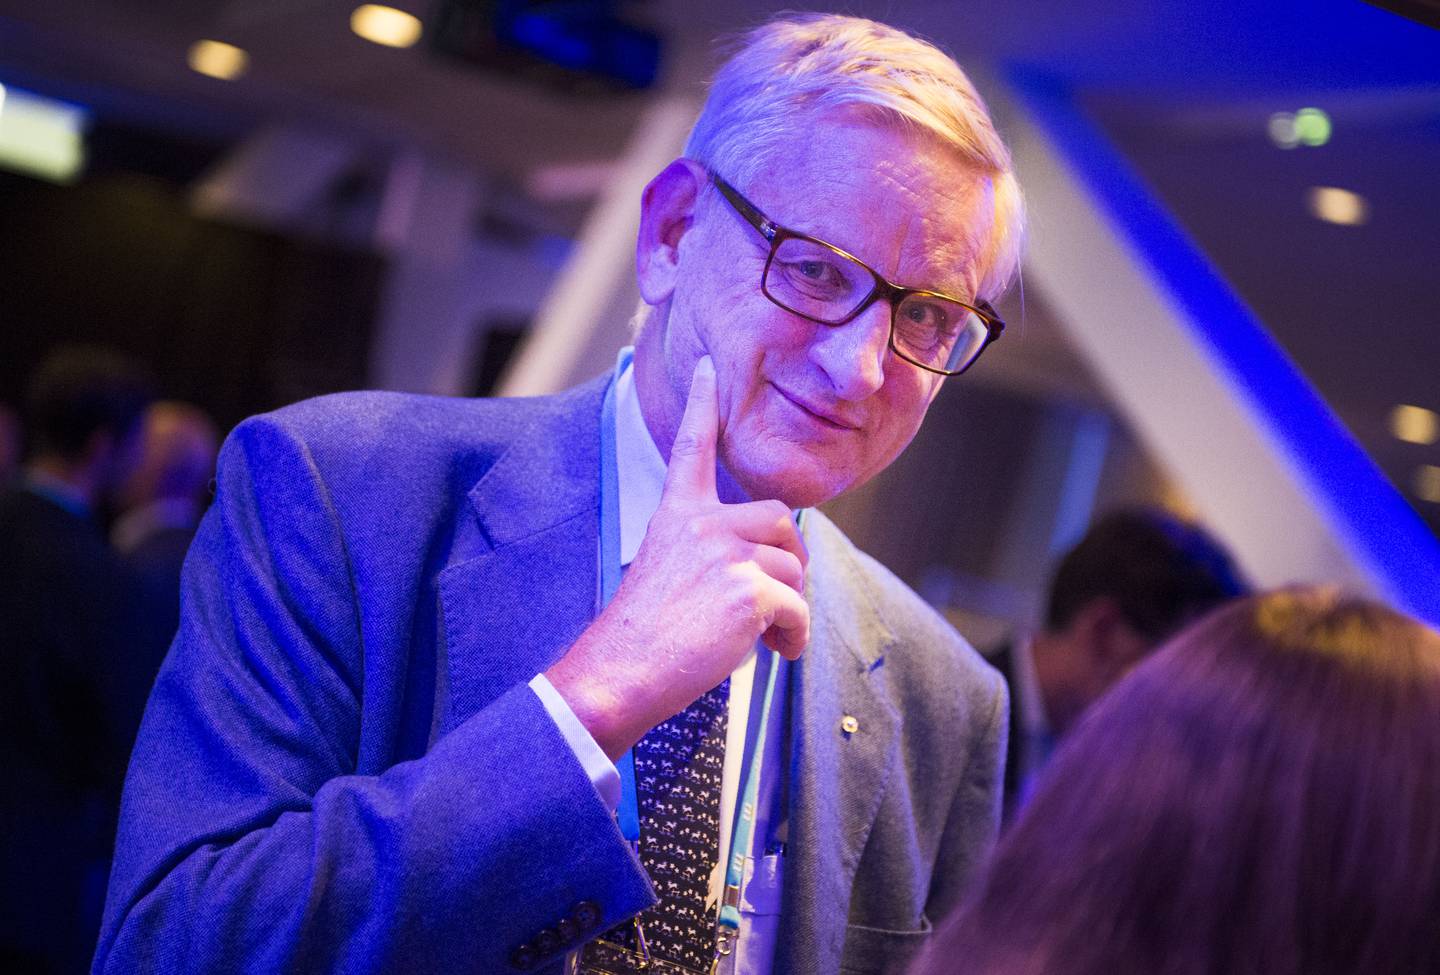 Former Prime Minister Carl Bildt in a photo from 2018. Photograph: Hanna Franzén/TT/NTB